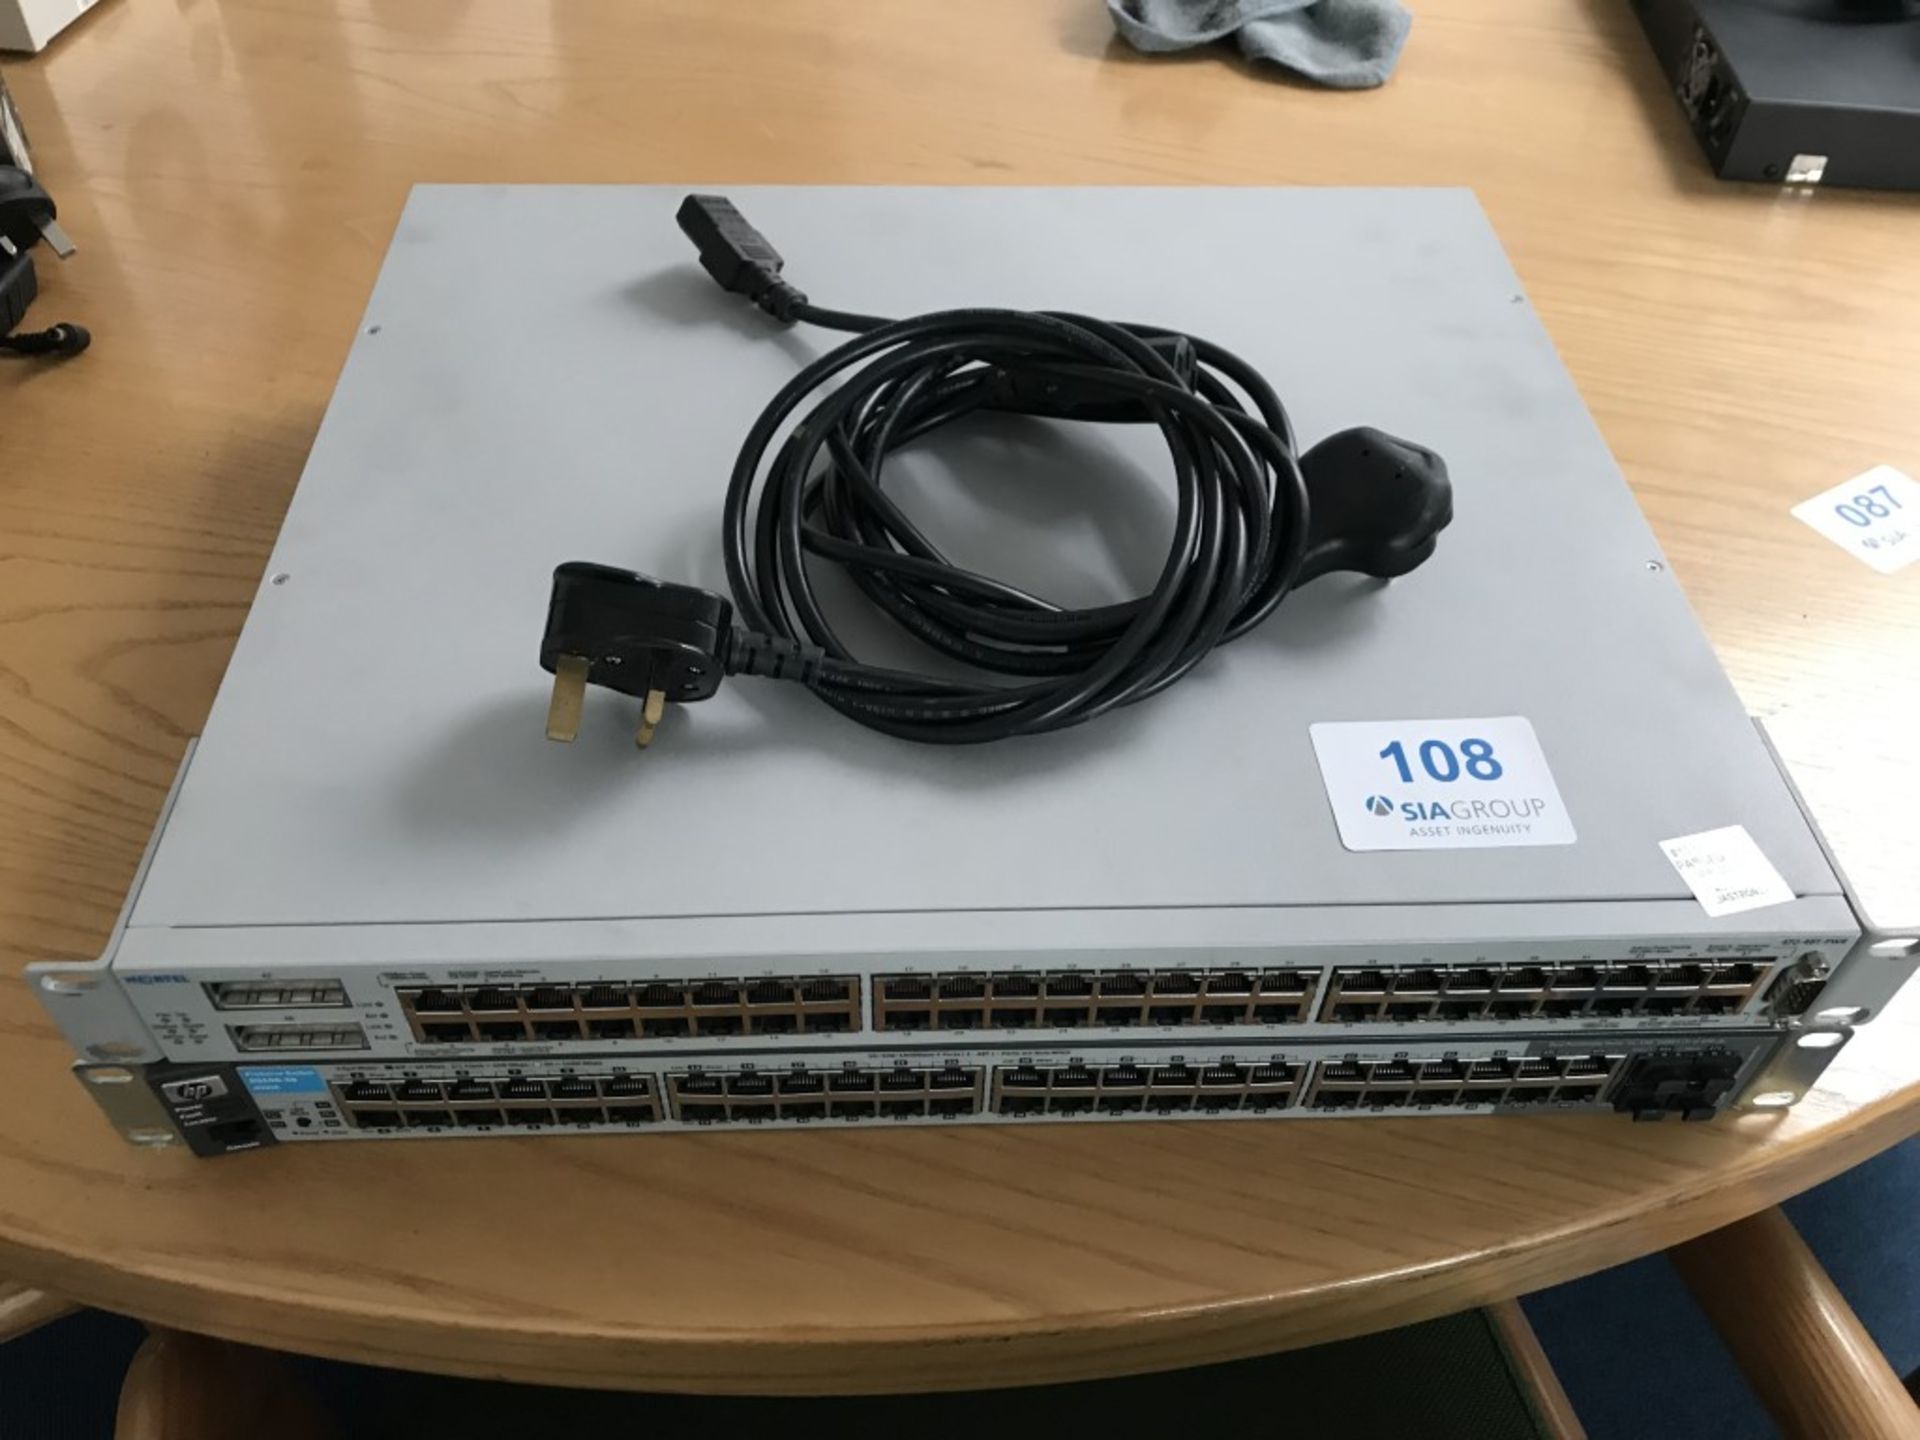 Nortel 470-48T-PWR & HP Procurve 2510G-48 Network switches